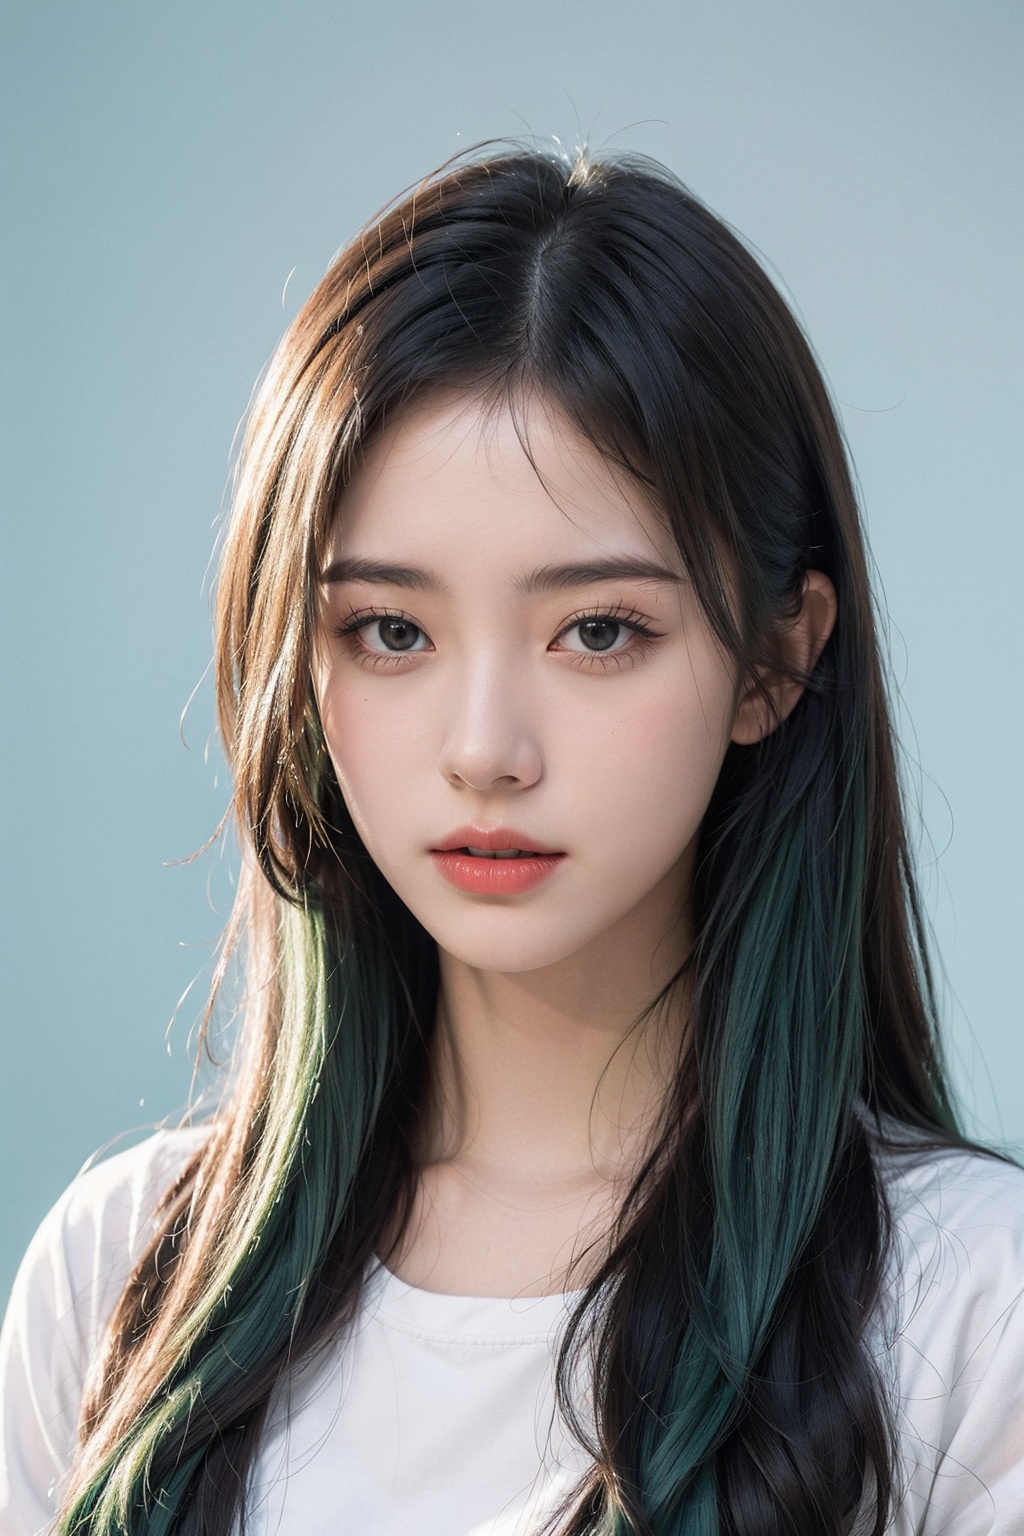 21yo girl, green hair, 
blue background,